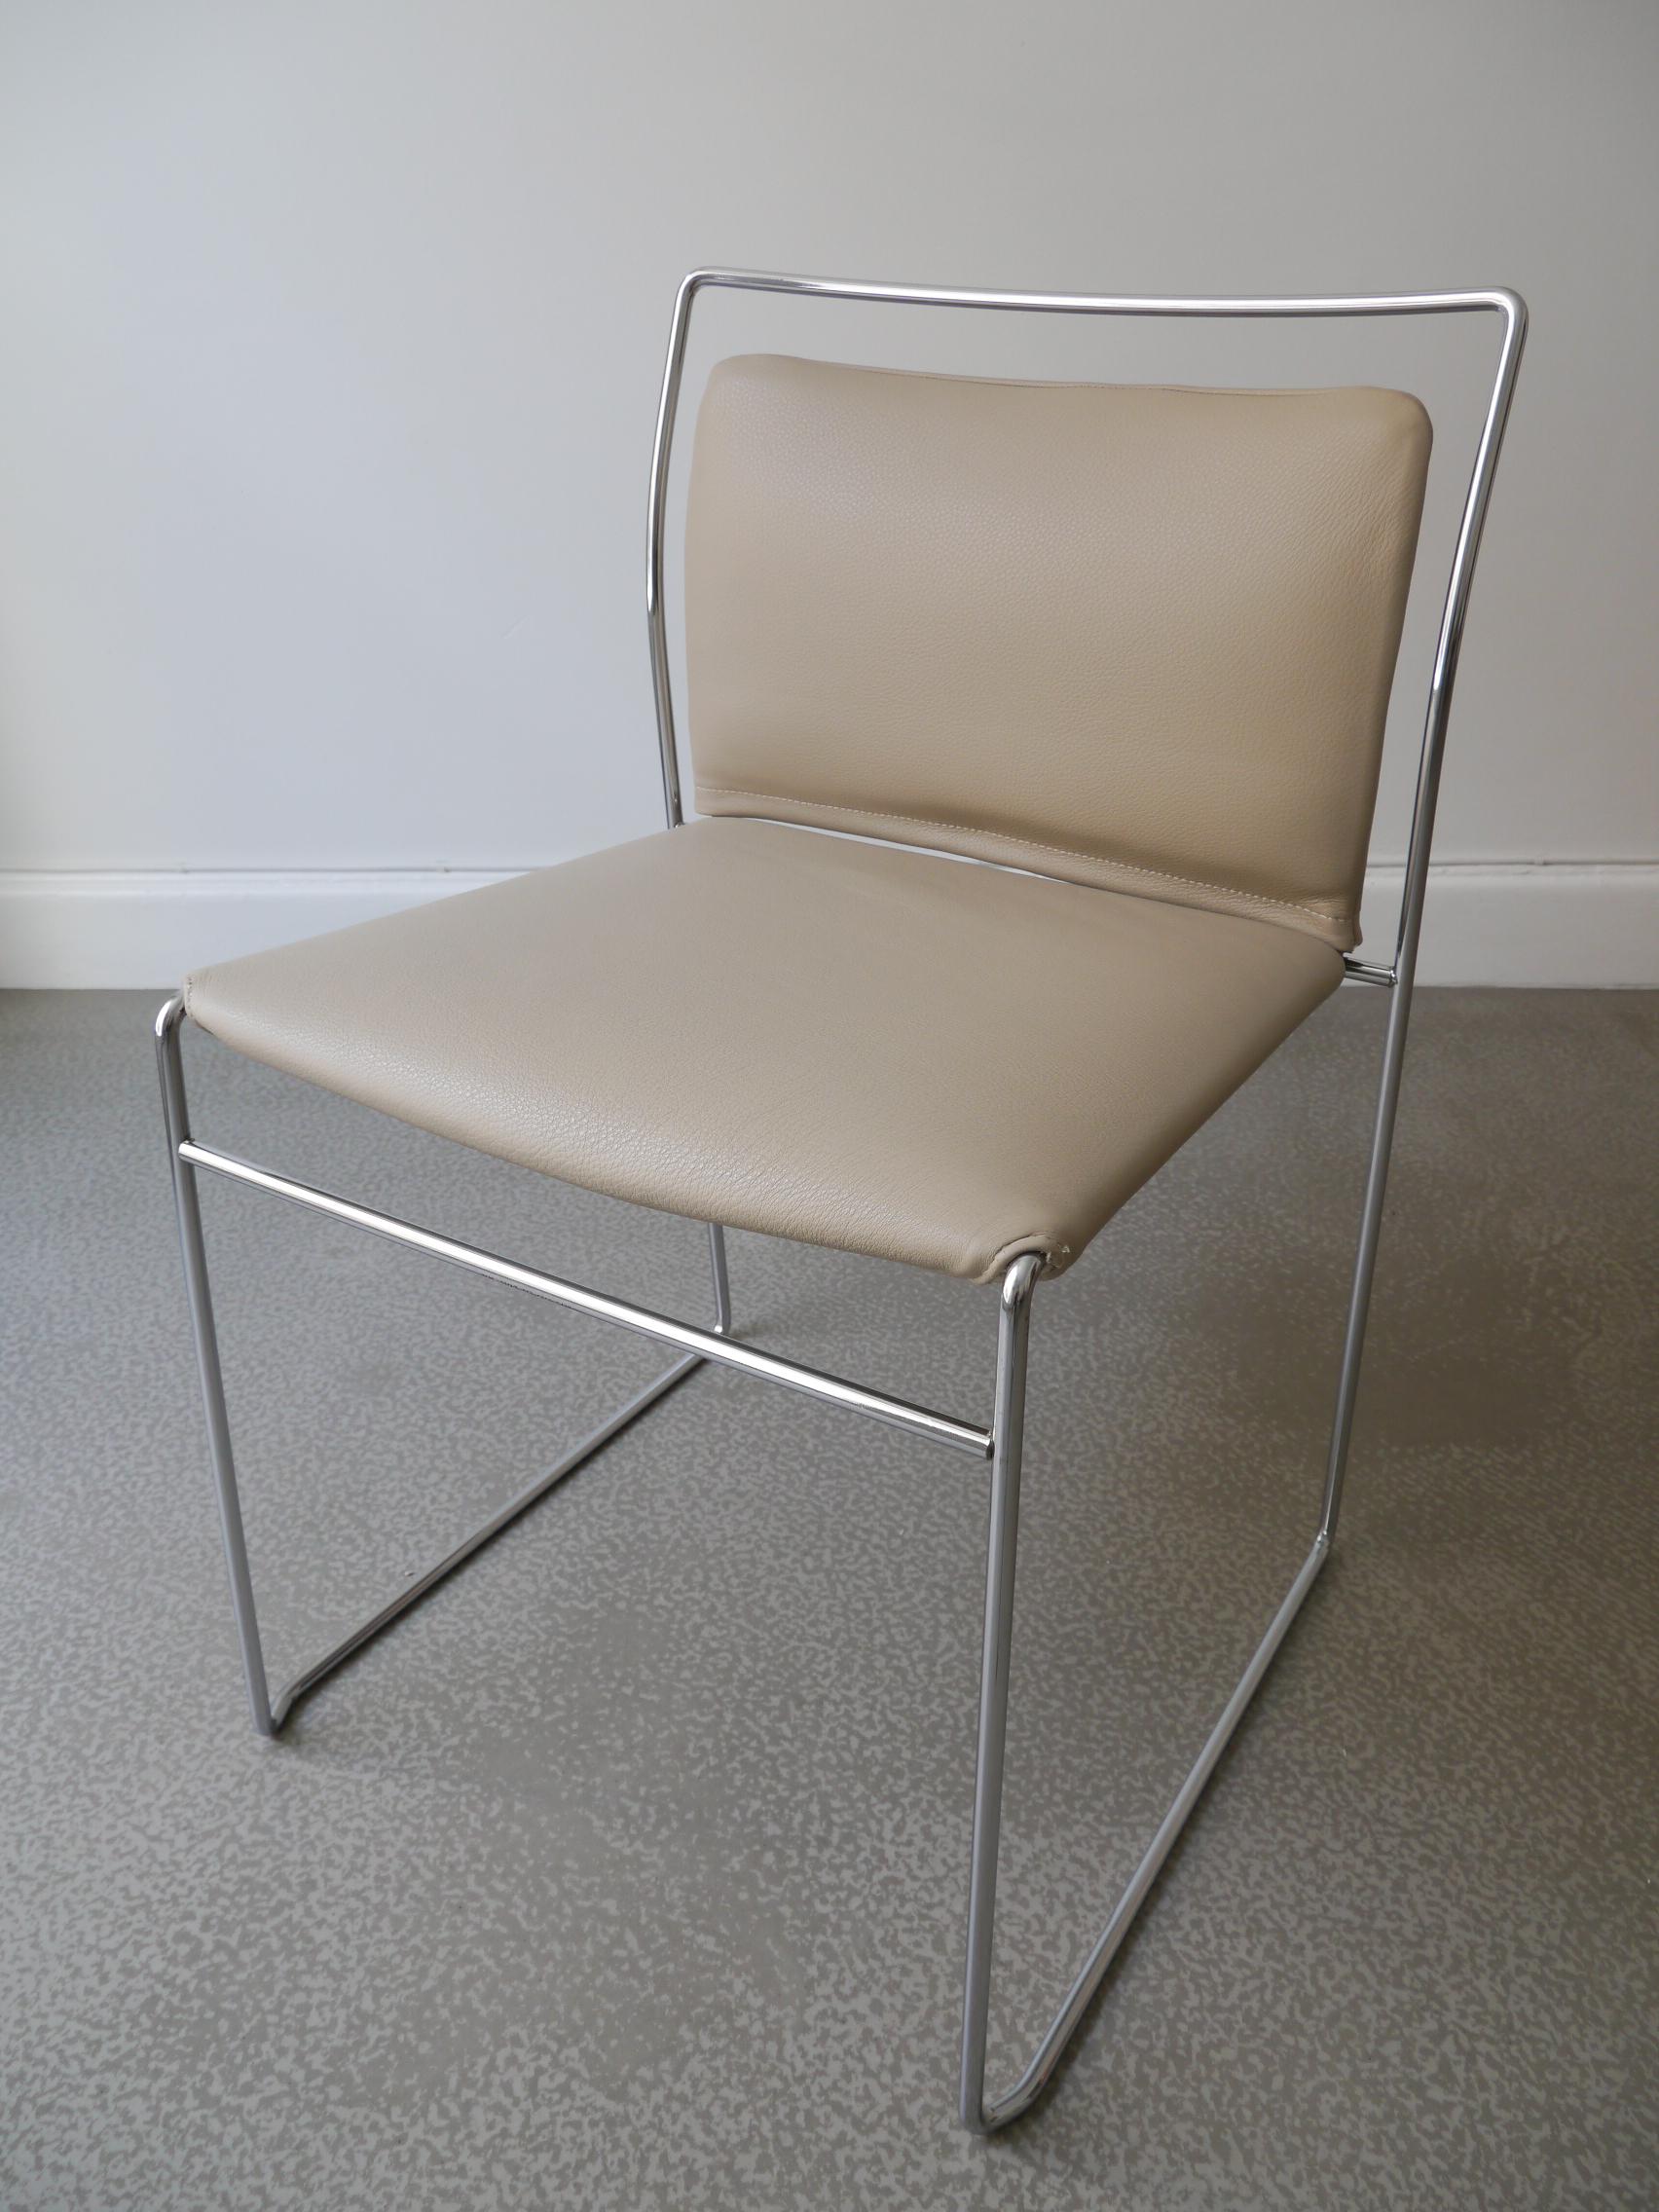 Midcentury Tulu Leather Chairs by Kazhuide Takahama for Simon Gavina, Italy 68 1